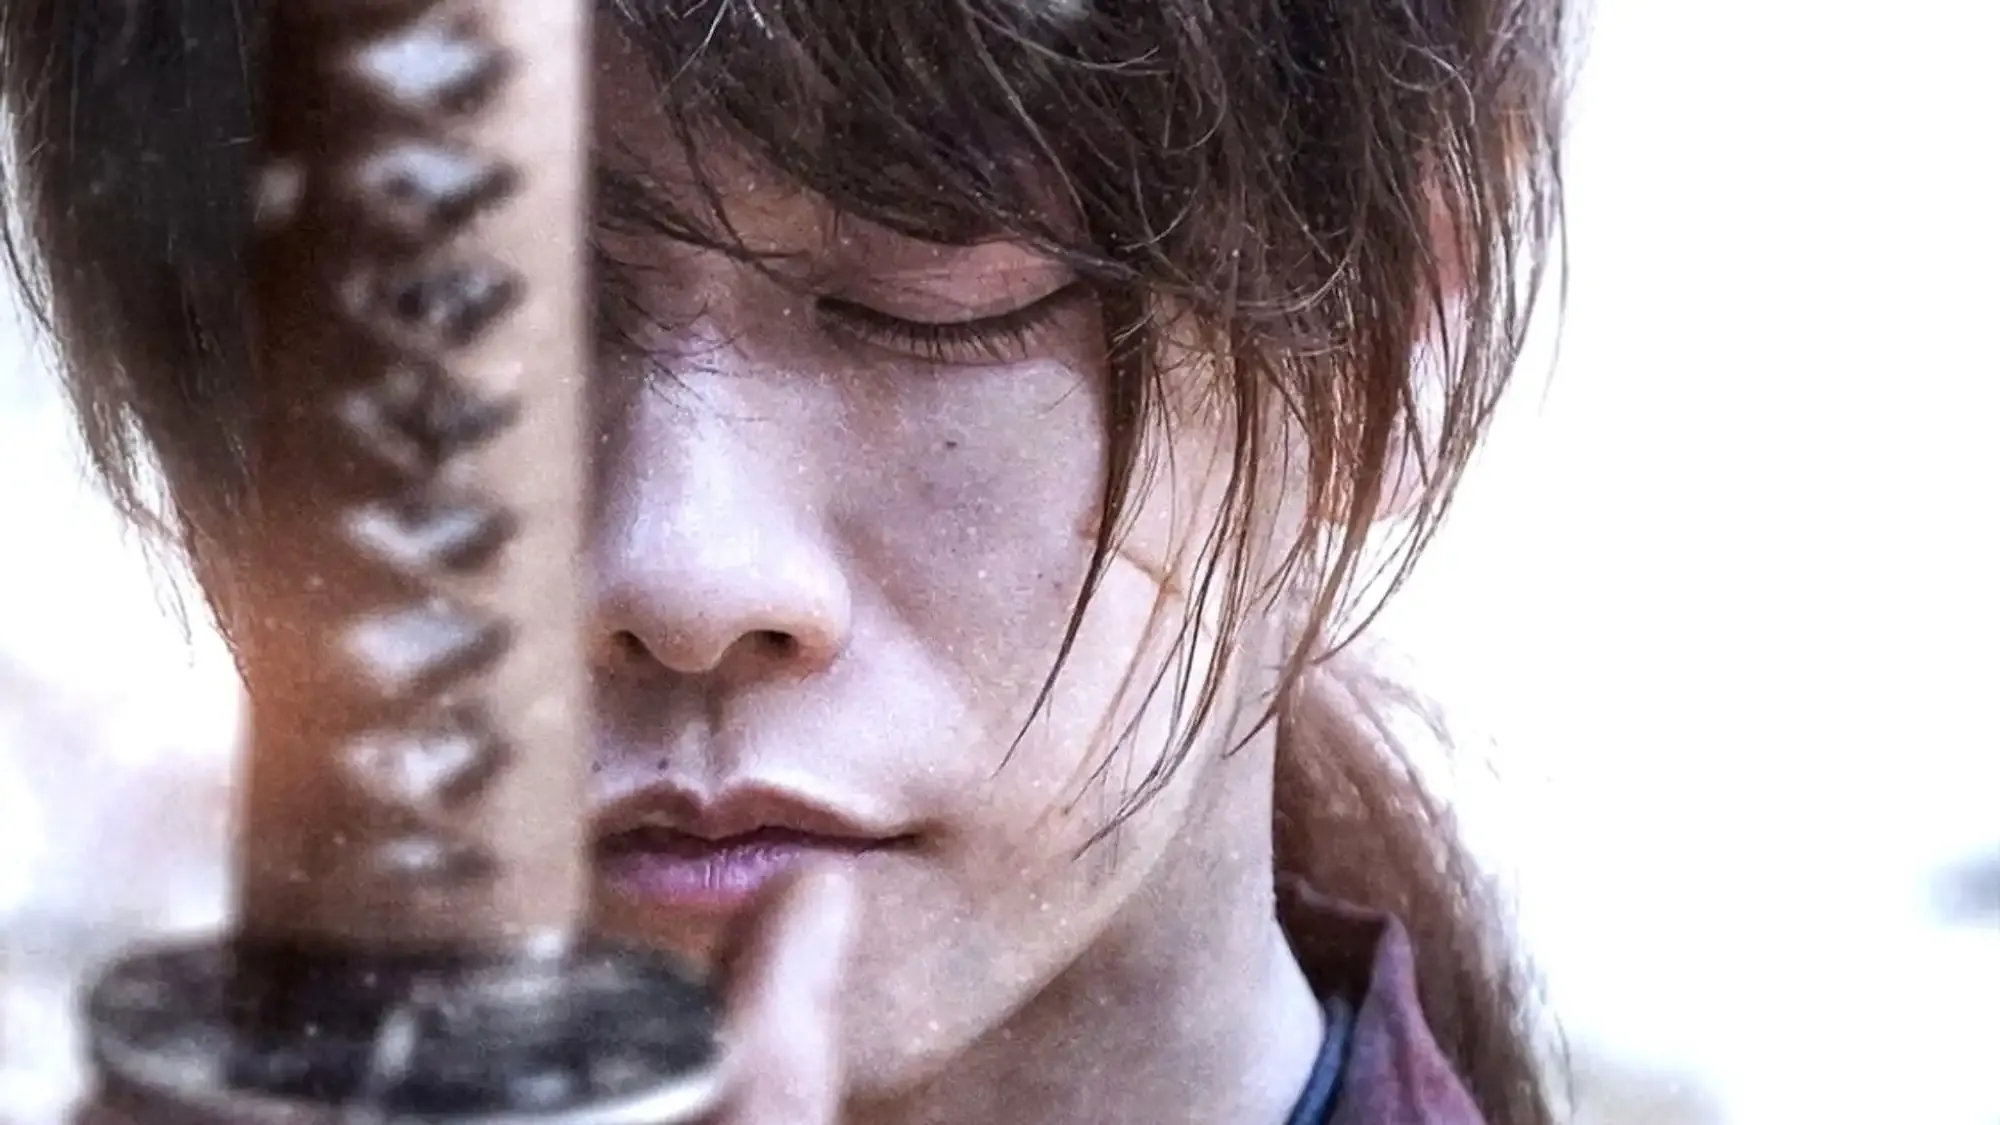 Rurouni Kenshin: The Beginning movie review